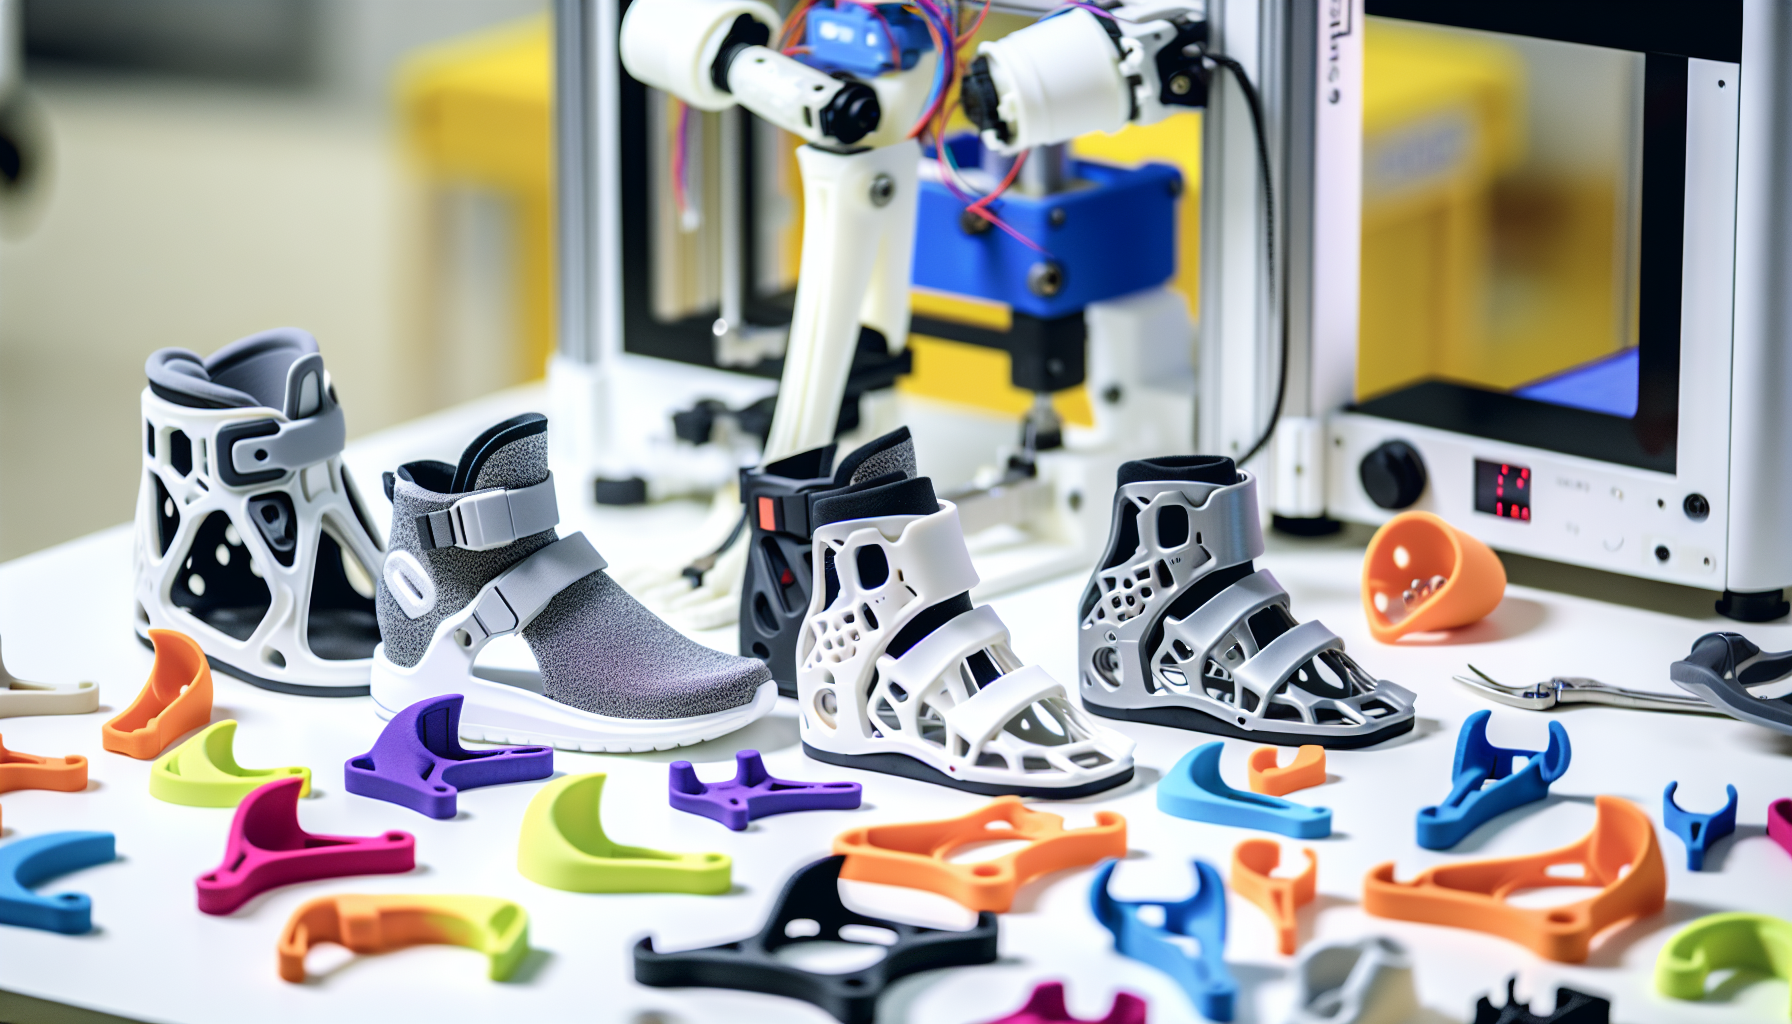 Innovative 3D printed AFOs